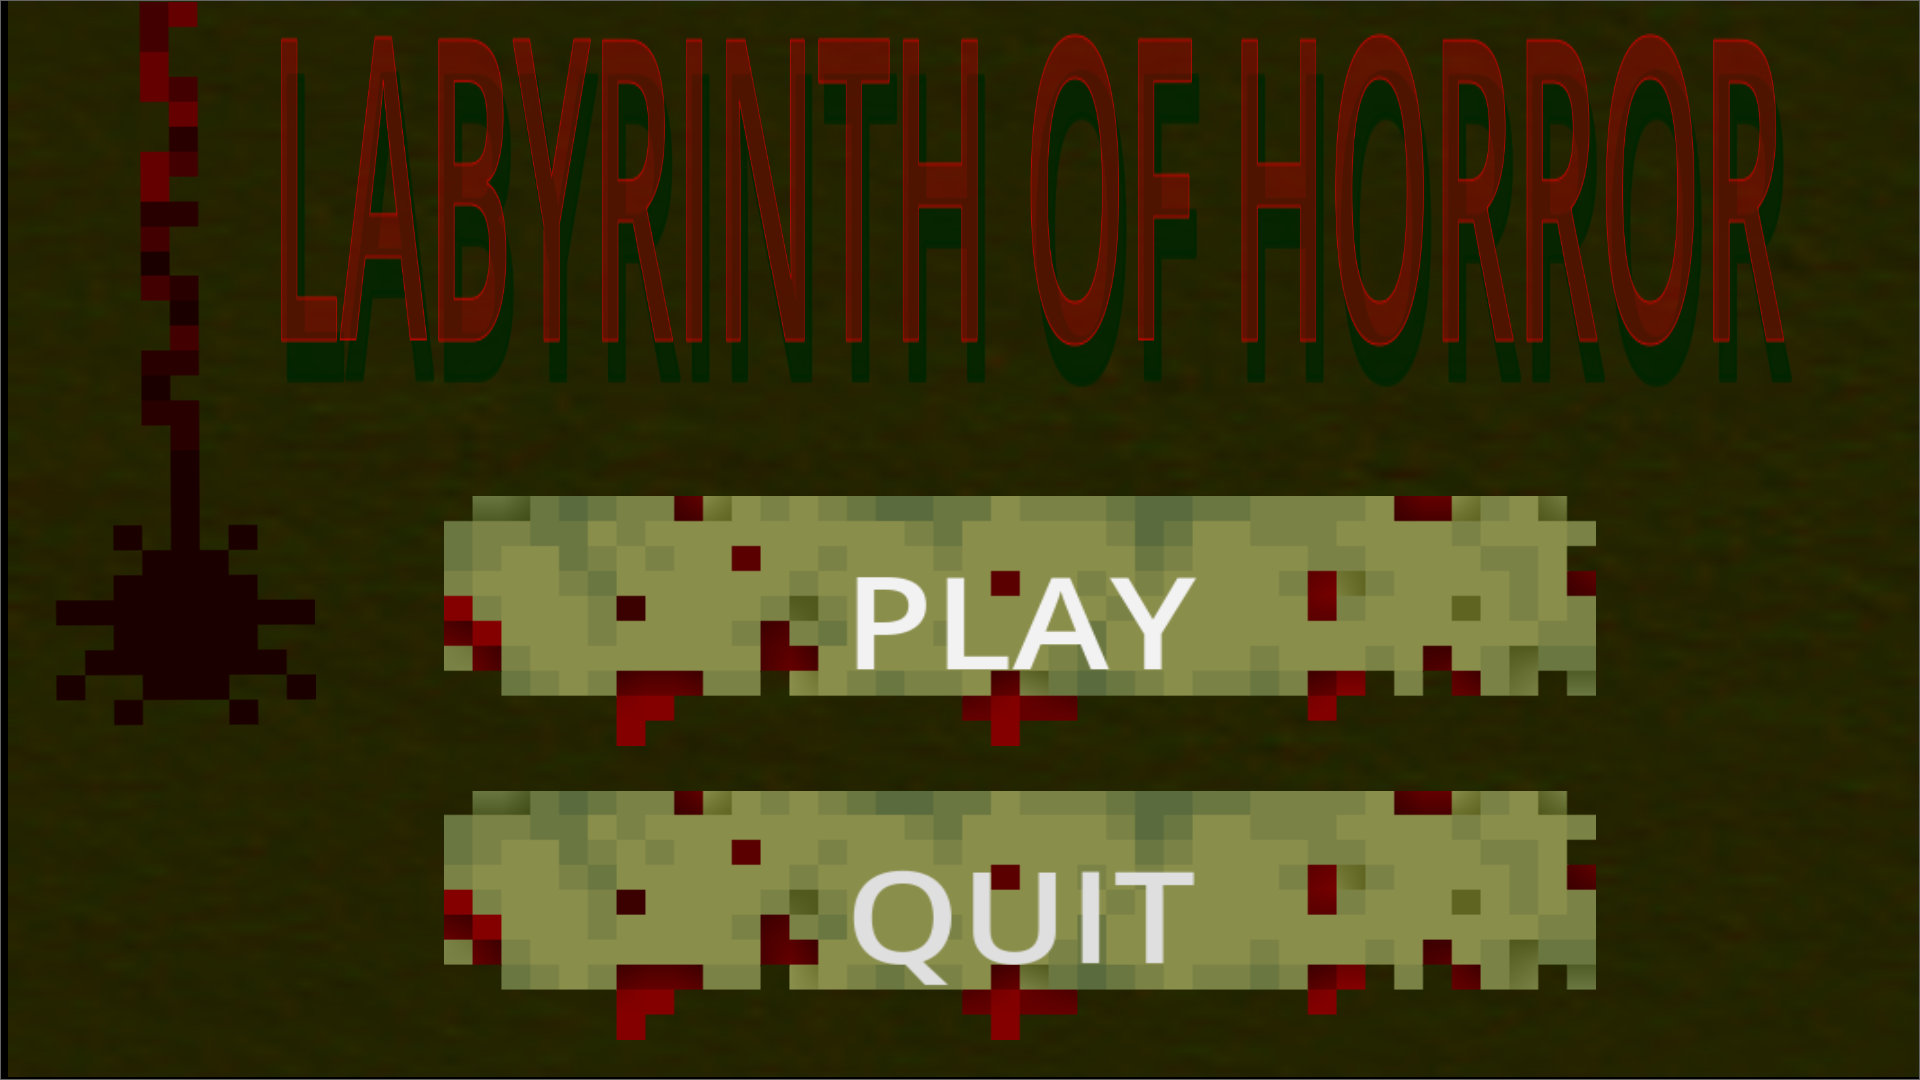 Labyrinth of Horror